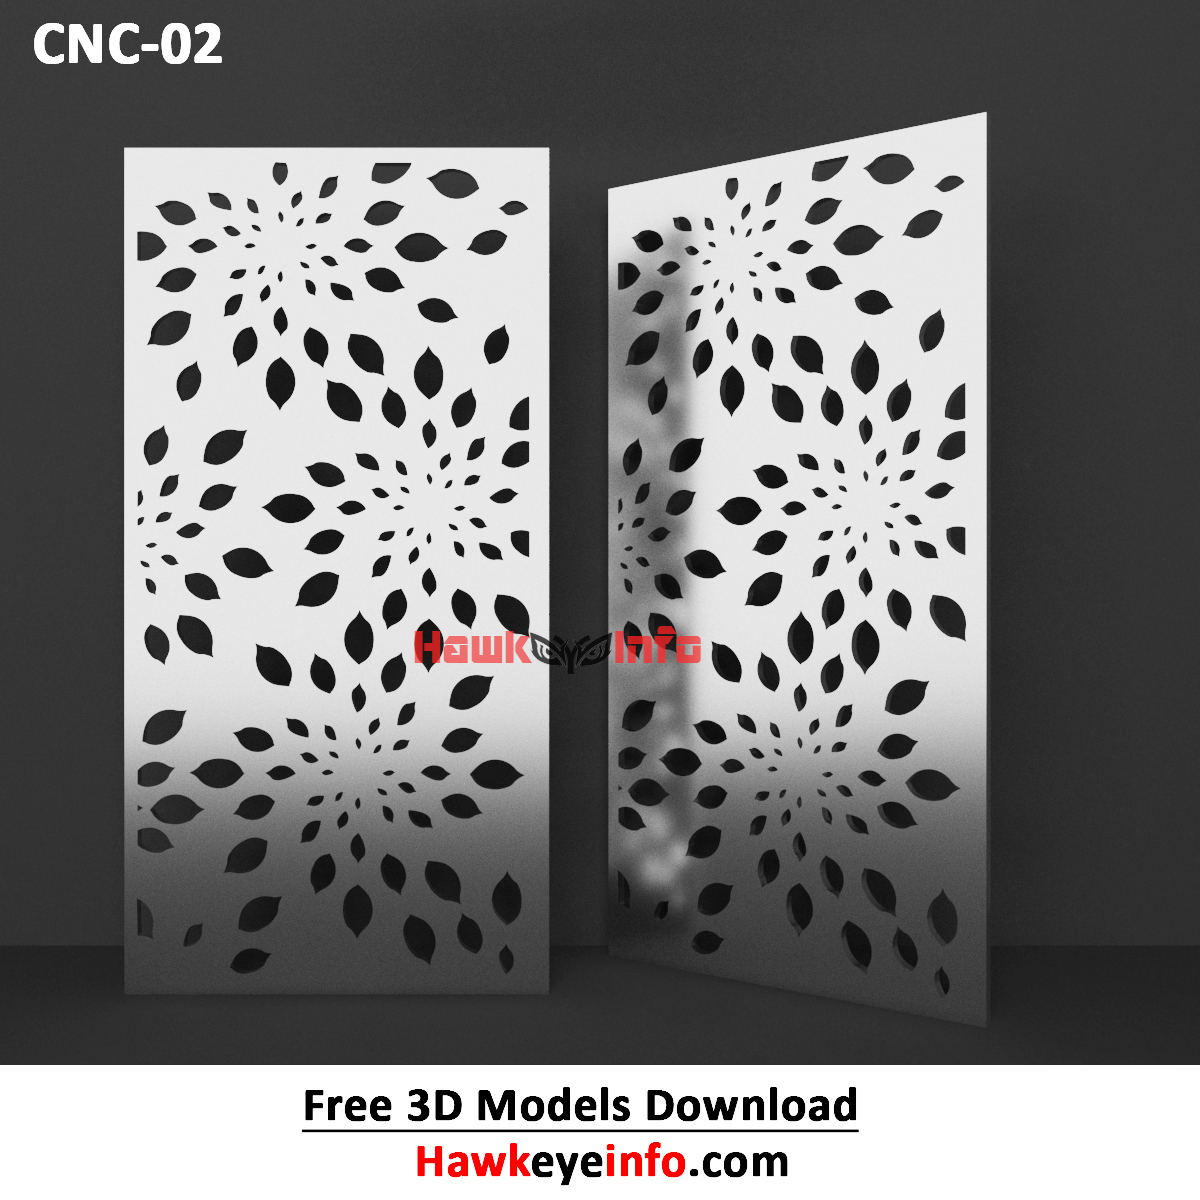 Goviz Cnc 02 Free 3d Models Download